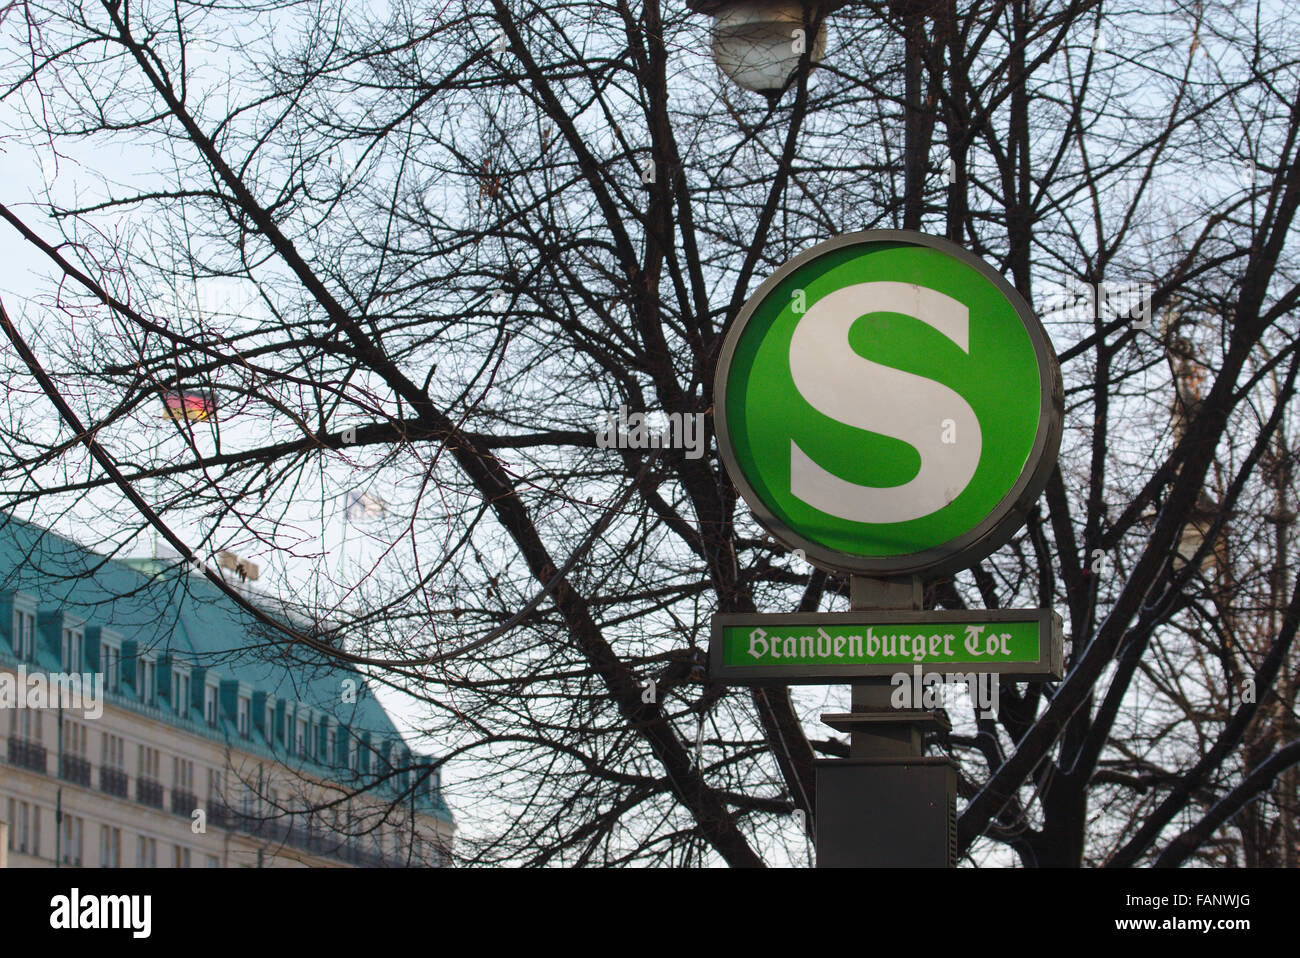 Symbol of the S-Bahn station 'Brandenburger Tor' in Berlin, Germany Stock Photo